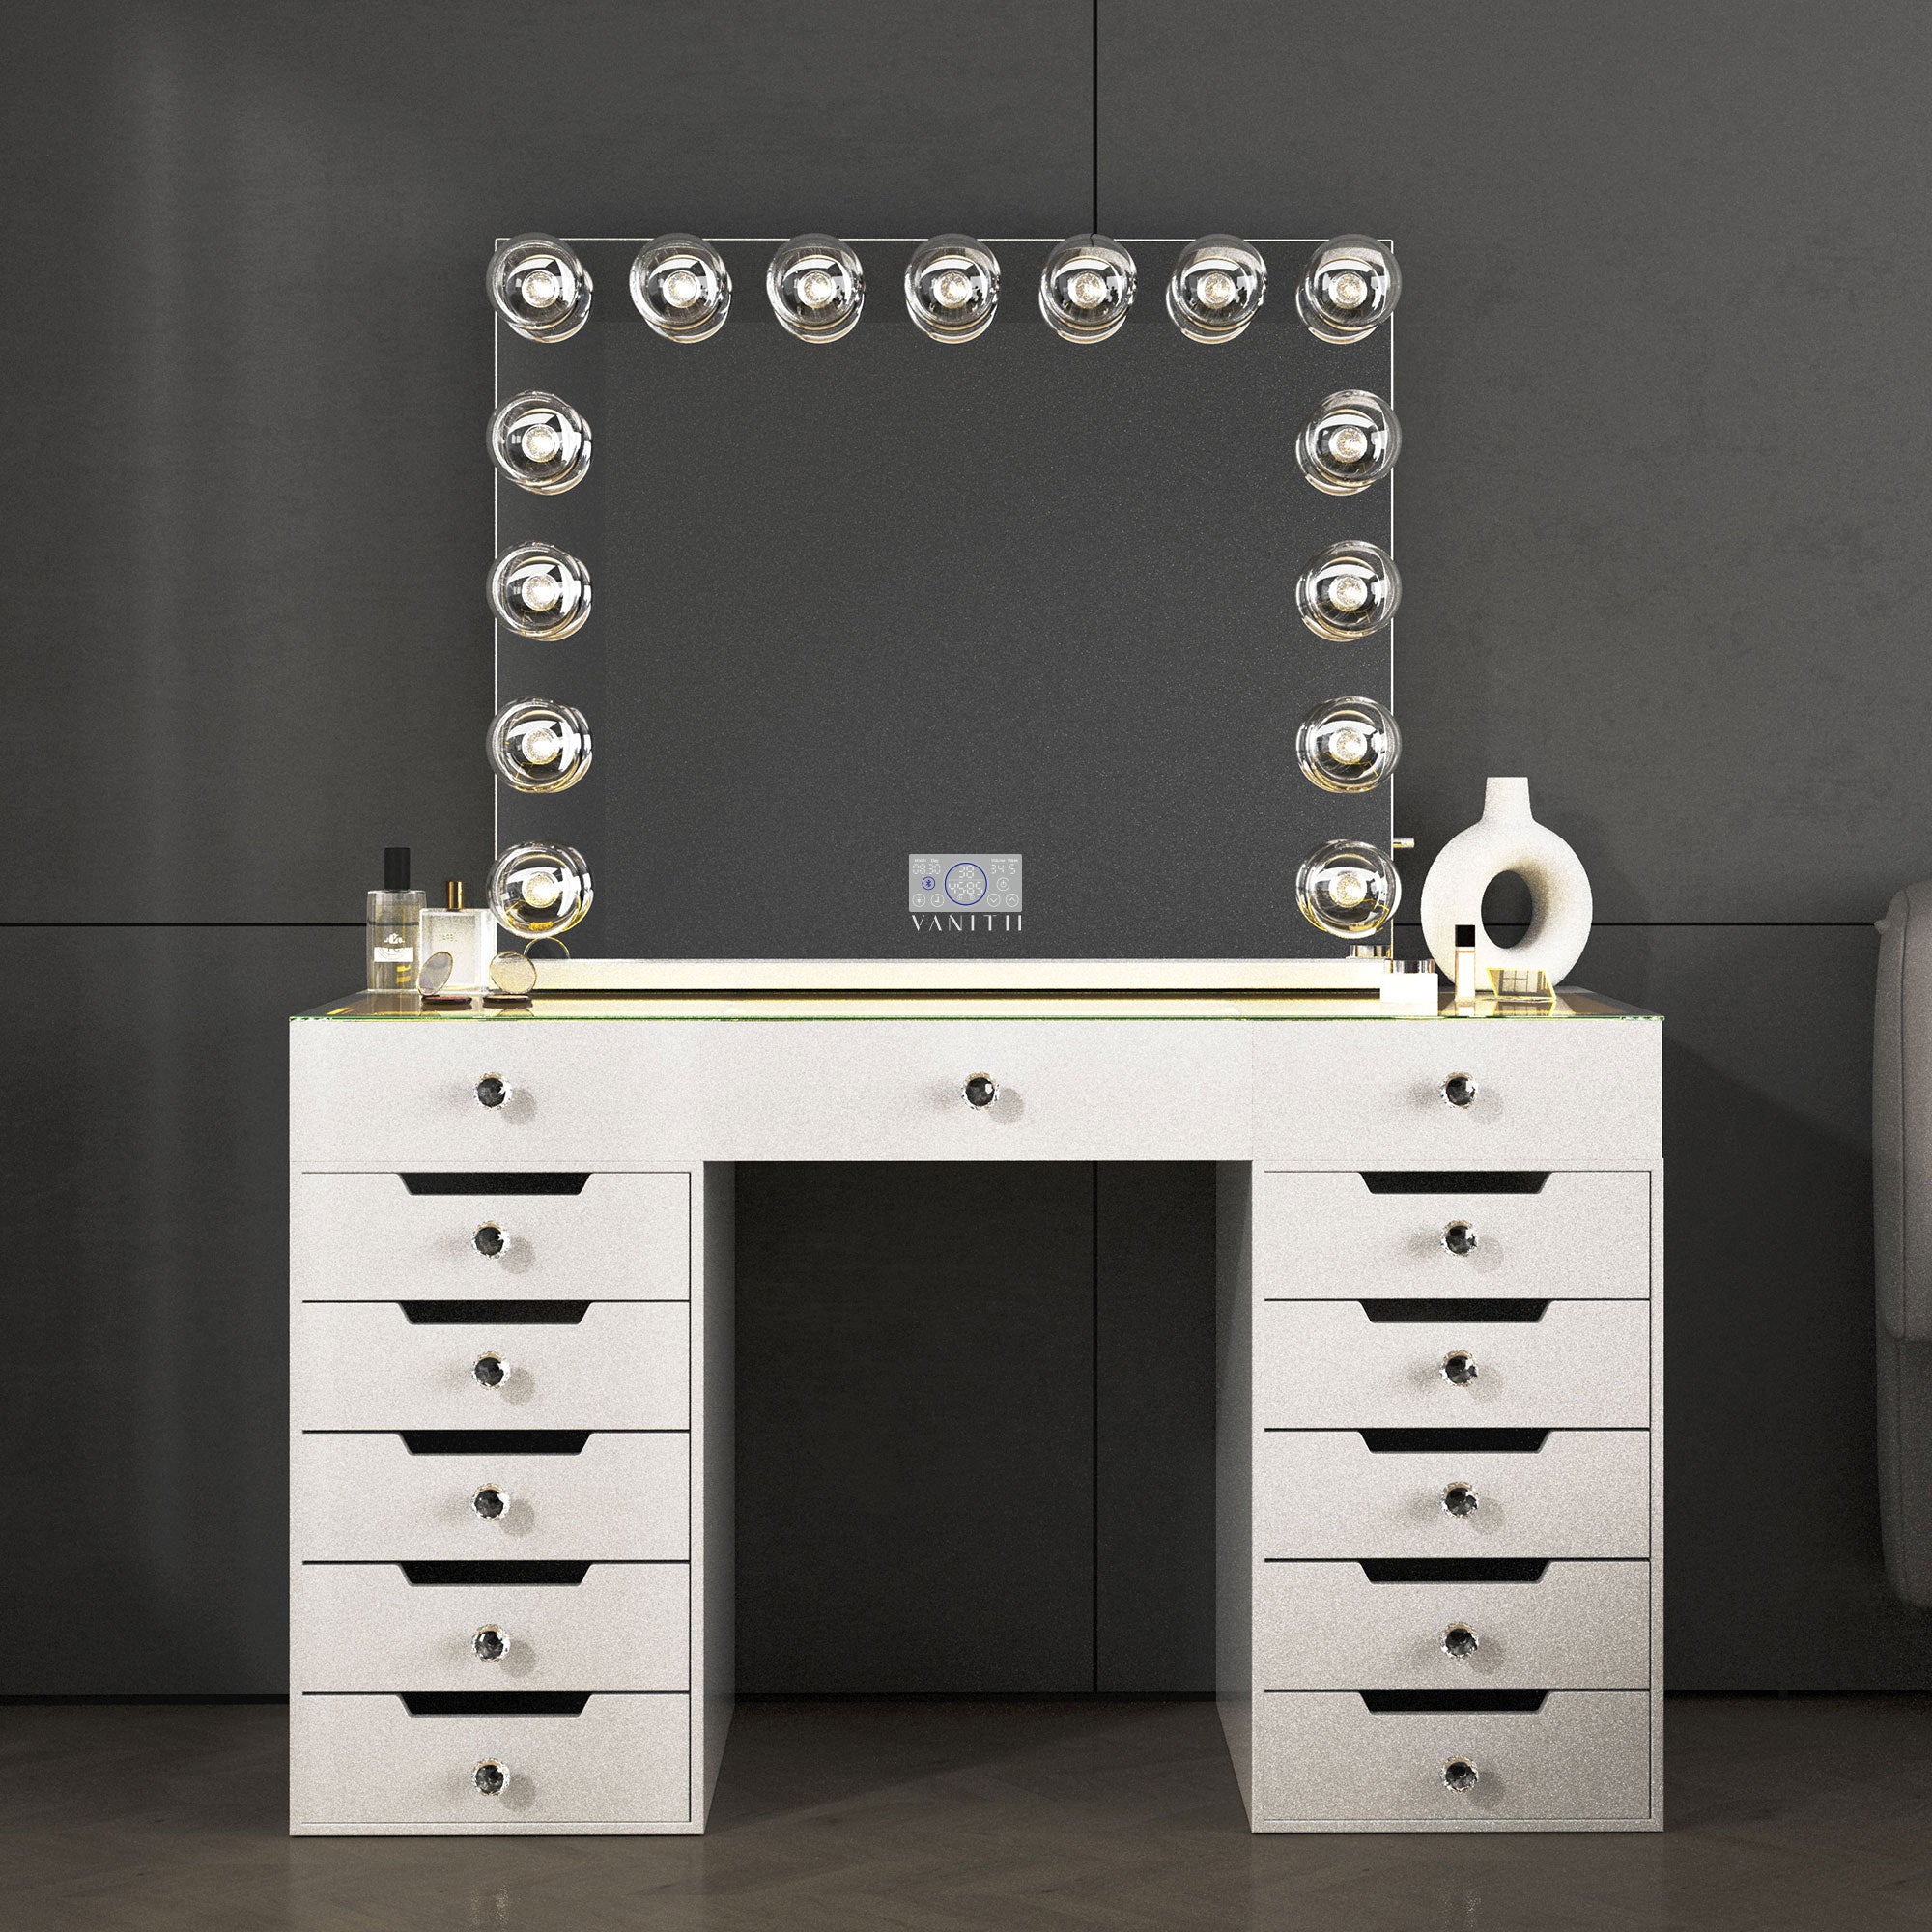 VANITII Marilyn Hollywood Vanity Mirror Pro Max - Tabletop or Wall Mount Vanity Mirror with 15 PCS G95FLM Bulbs